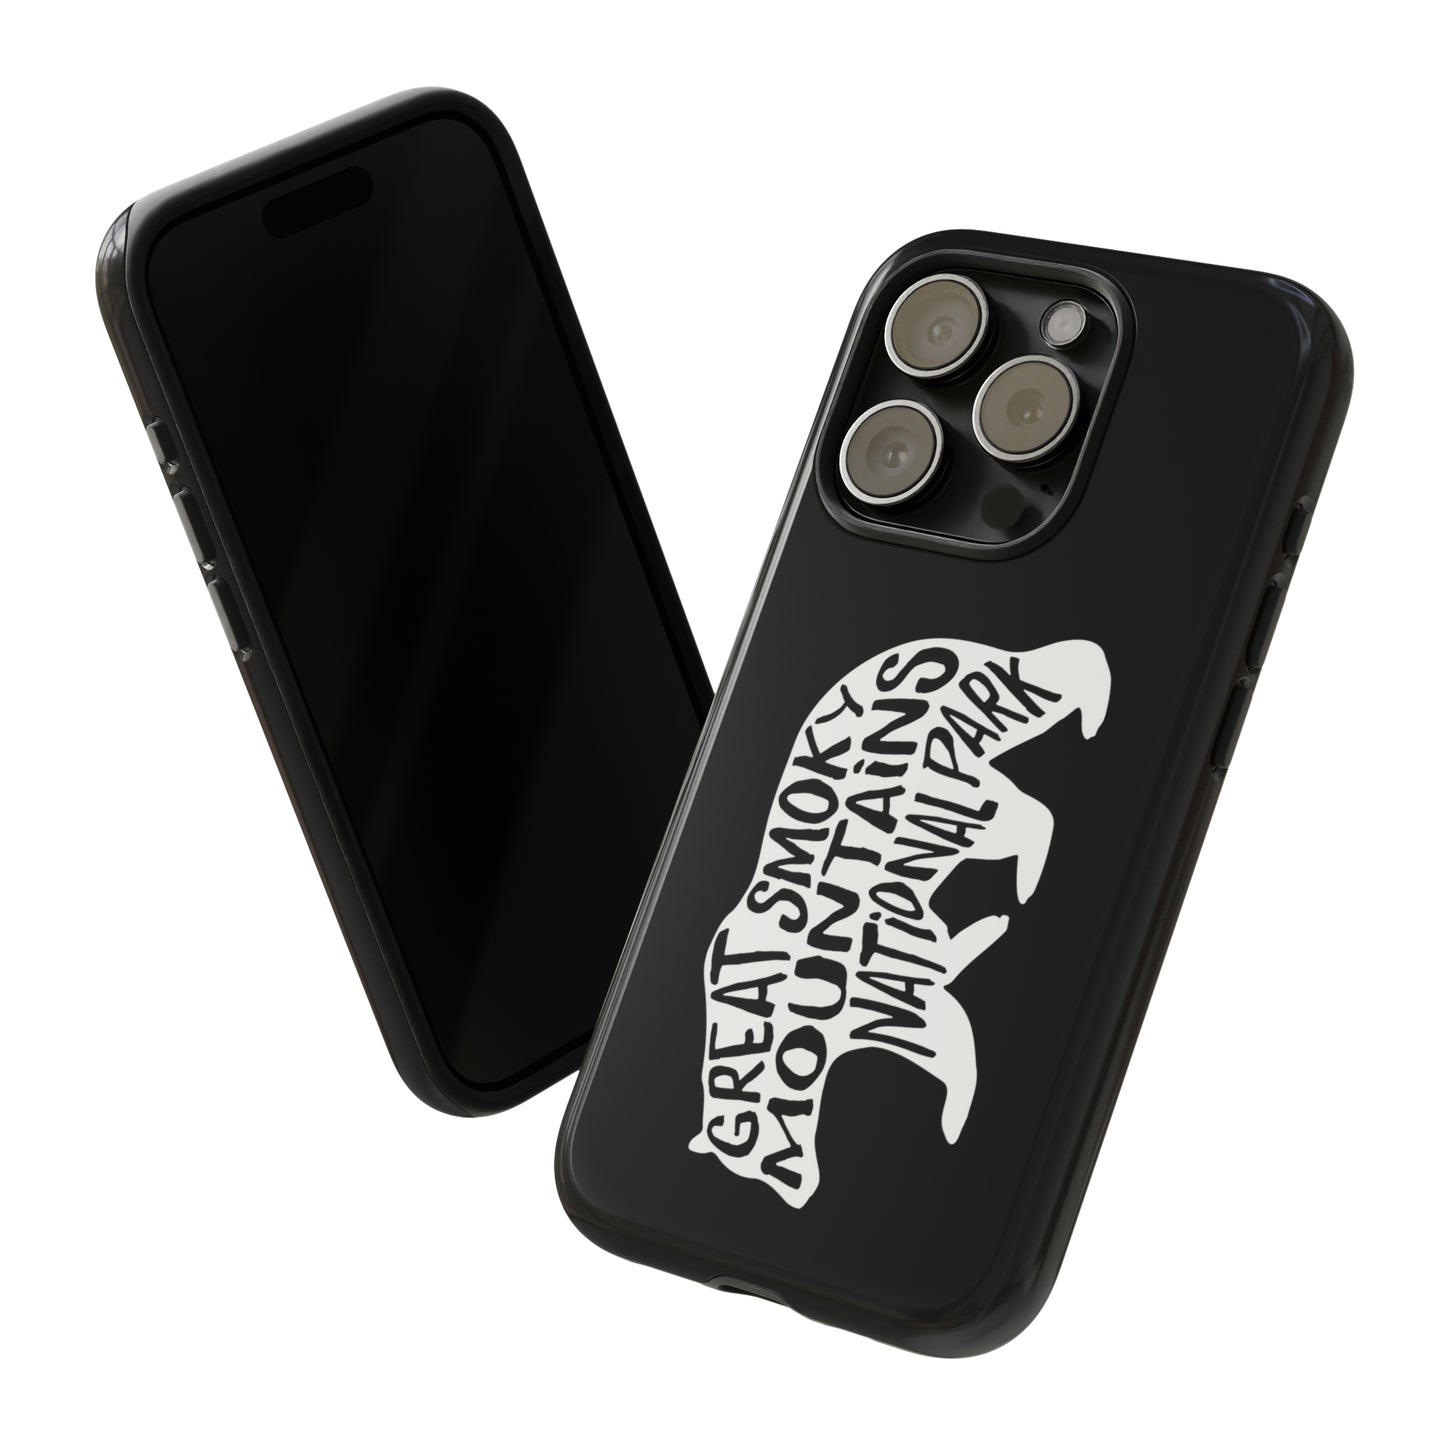 Great Smoky Mountains National Park Phone Case - Black Bear Design